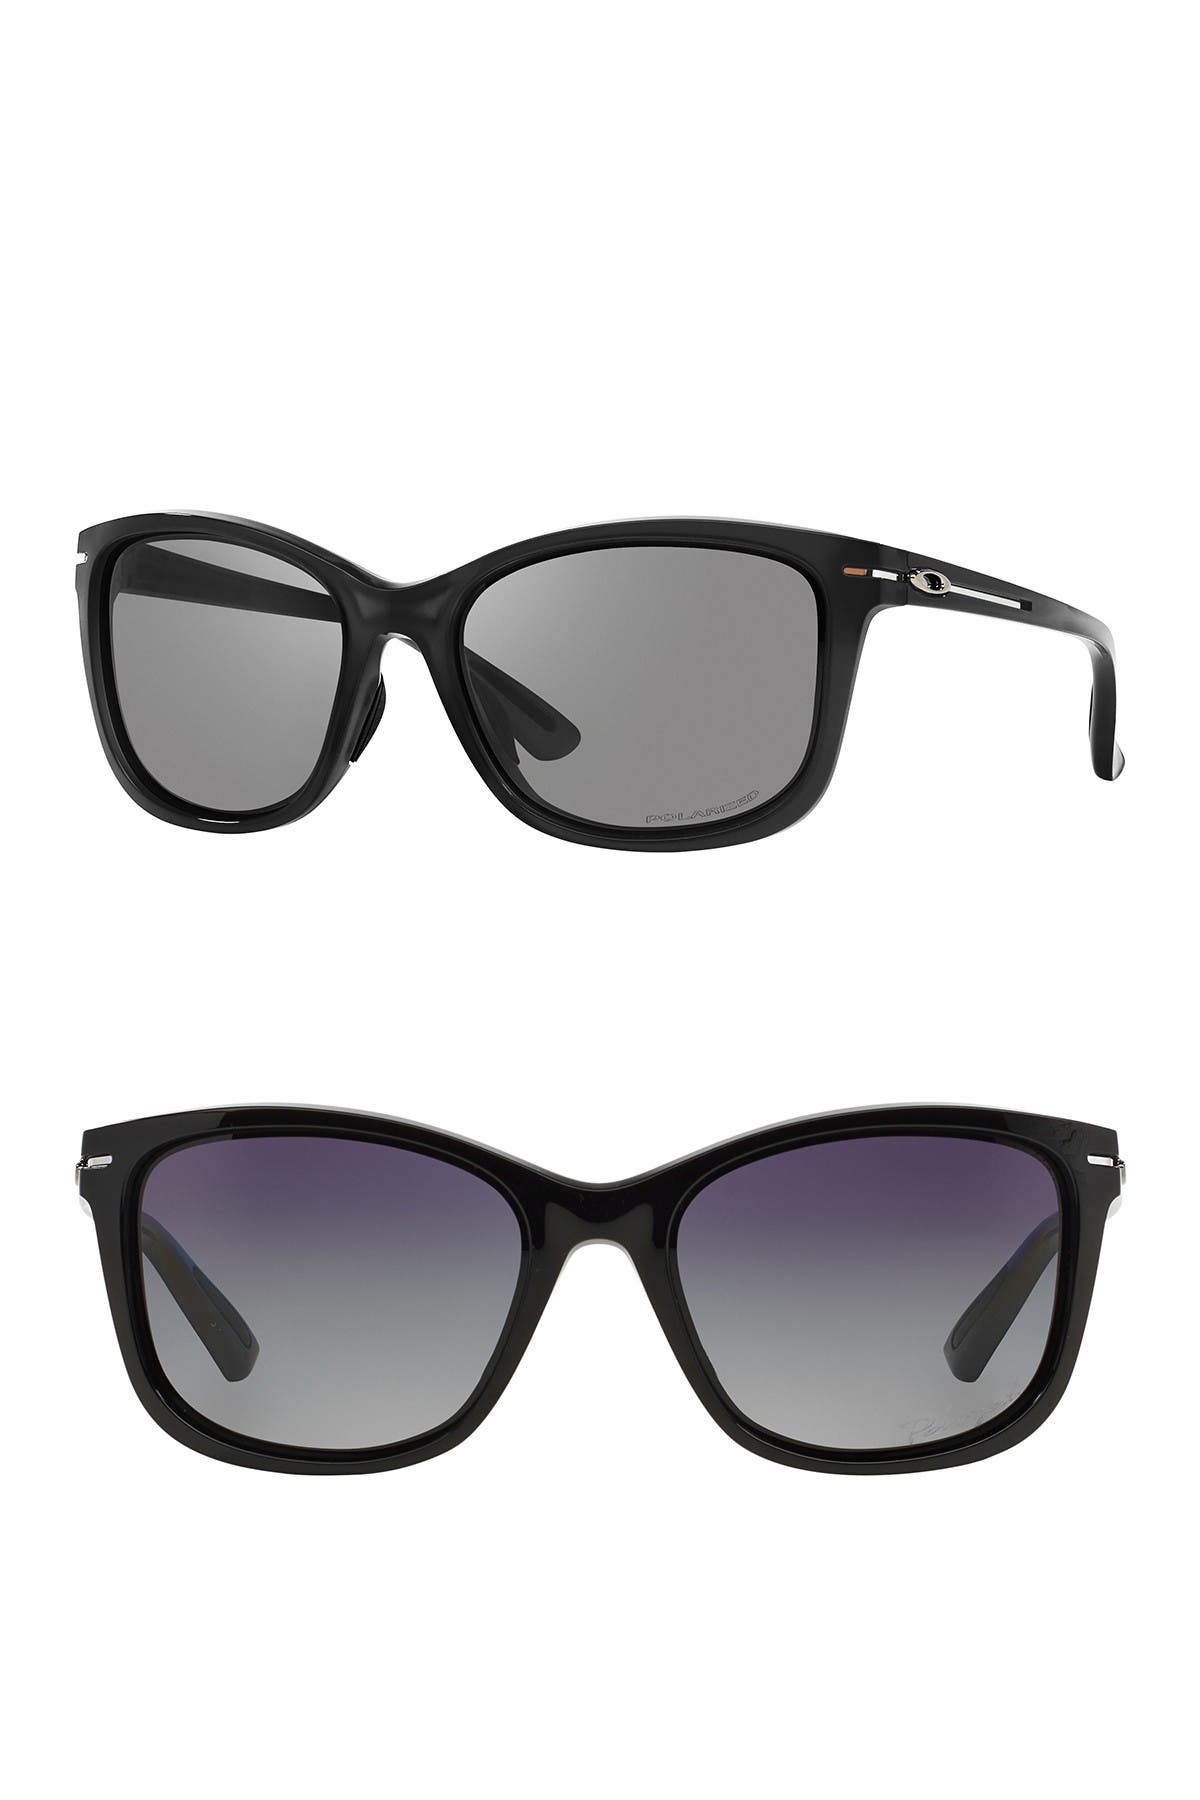 oakley sunglasses under $50